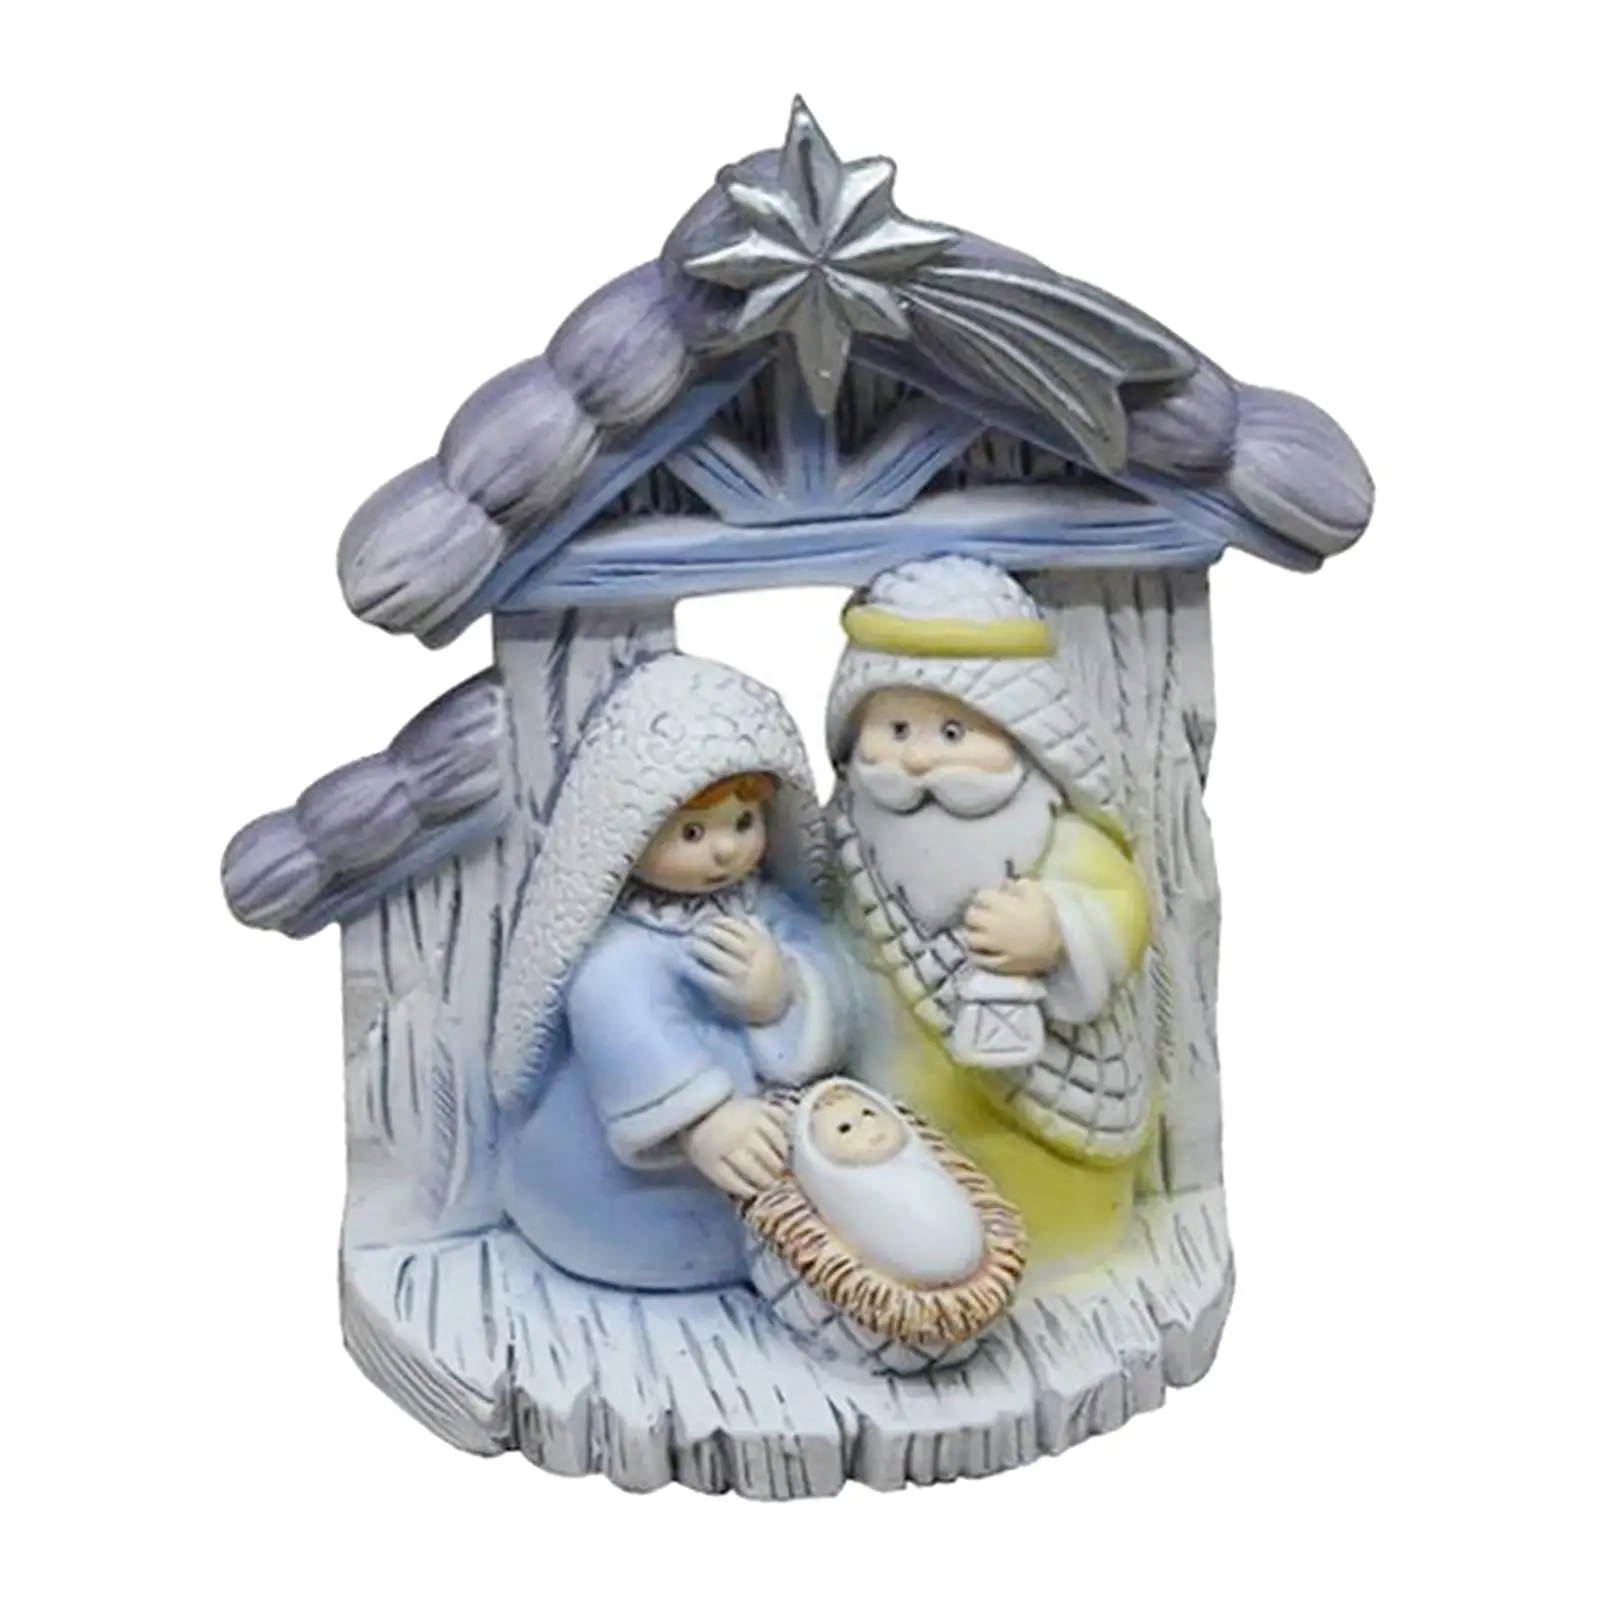 Nativity Scene Holy Family Figurine Religious Figurine Resin Decorative Craft